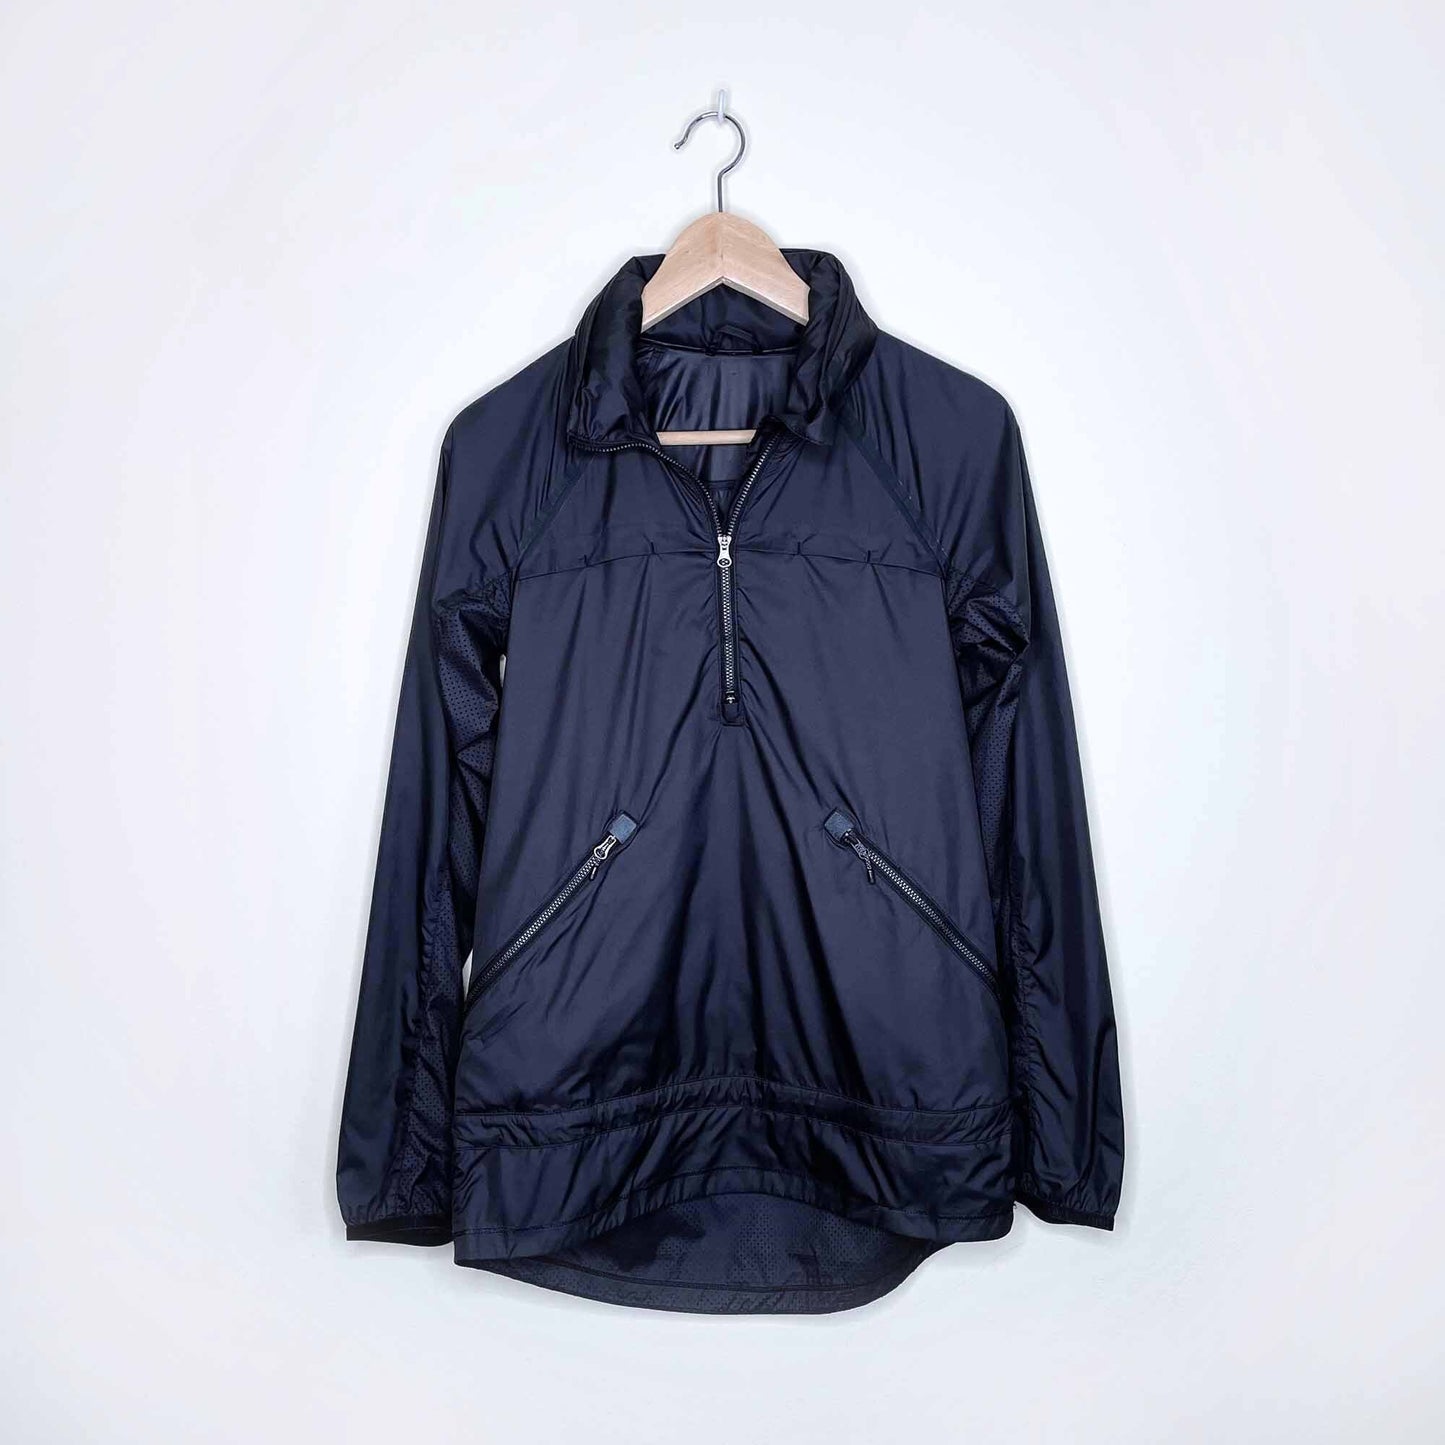 lululemon 1/4 zip light popover jacket with packable hood - size 4